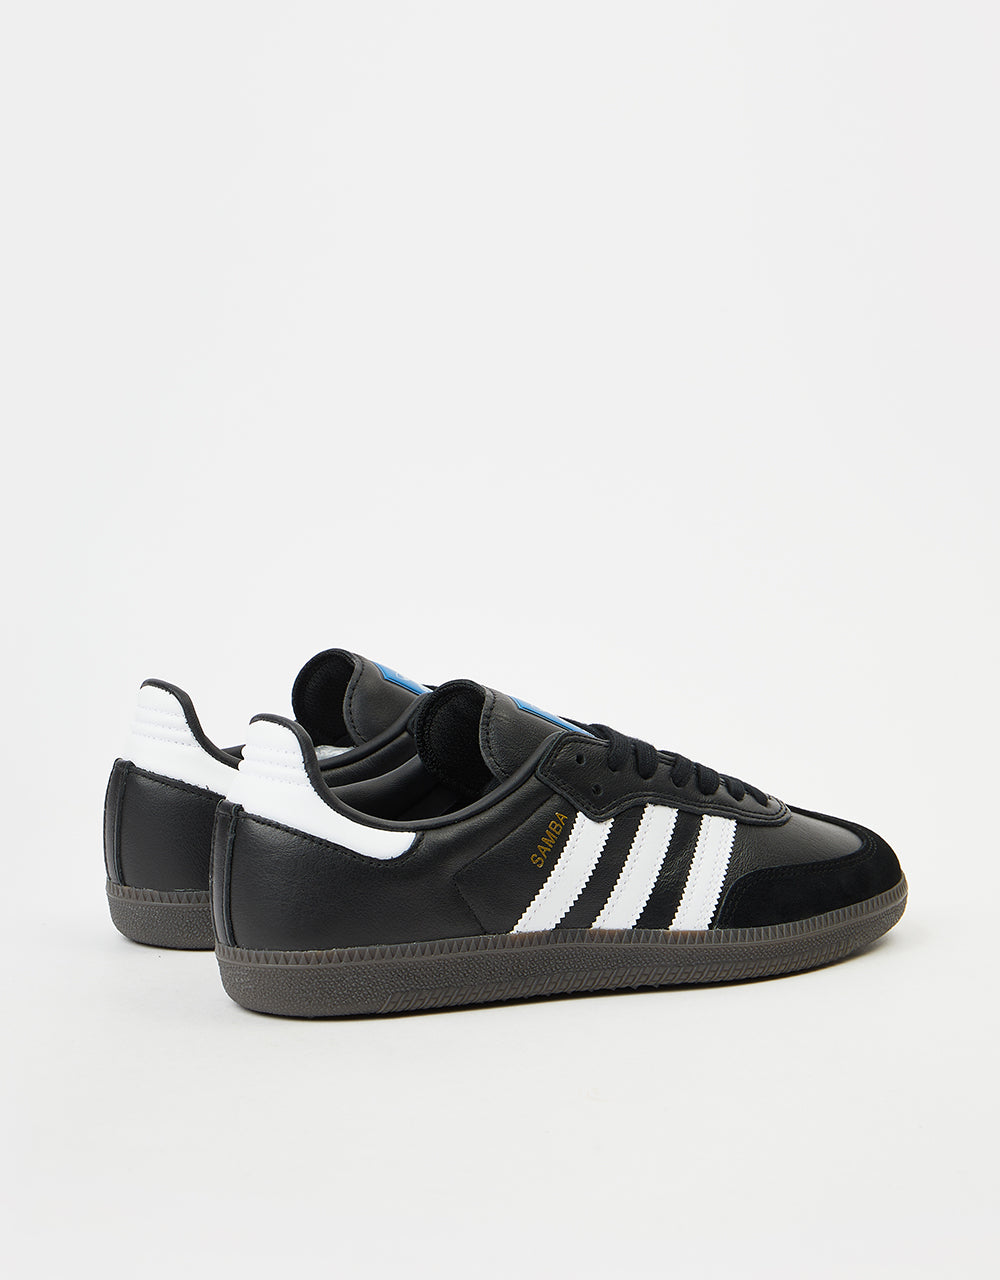 Adidas Samba ADV Skate Shoes - Core Black/White/Gum